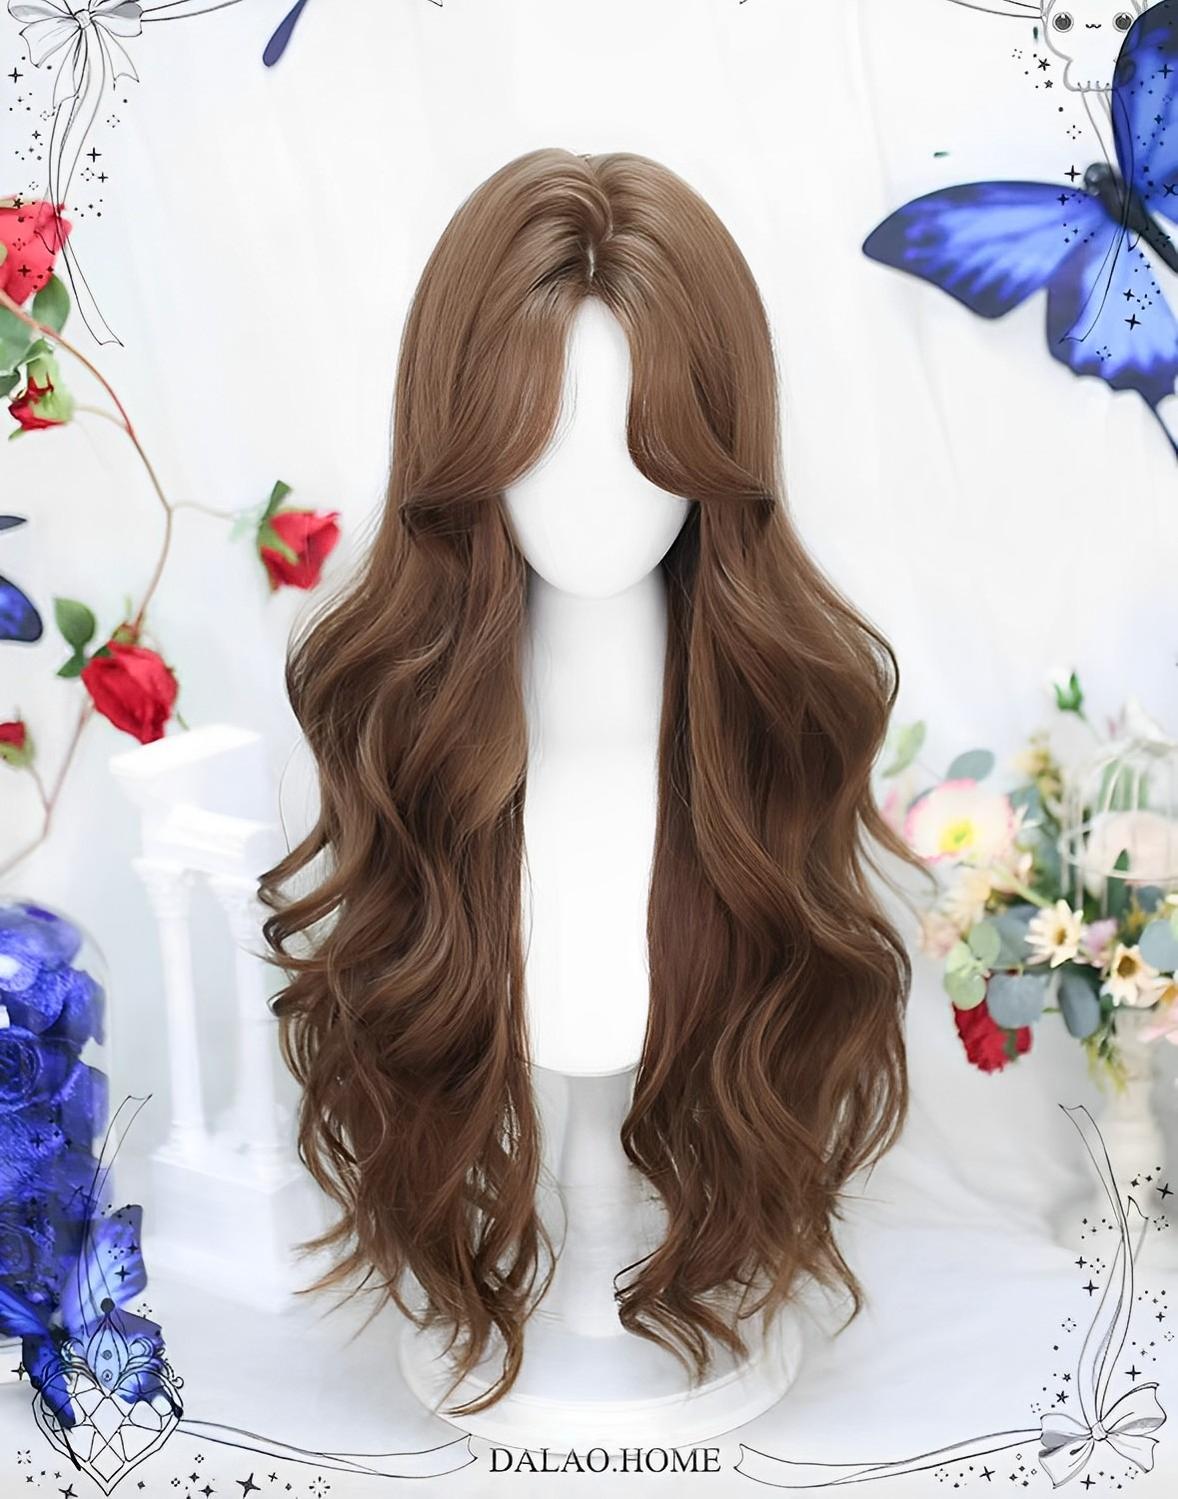 Dalao Home~Shan Li~Daily Lolita Wigs Honey Brown Long Curly Hair Brown wig with a hairnet  